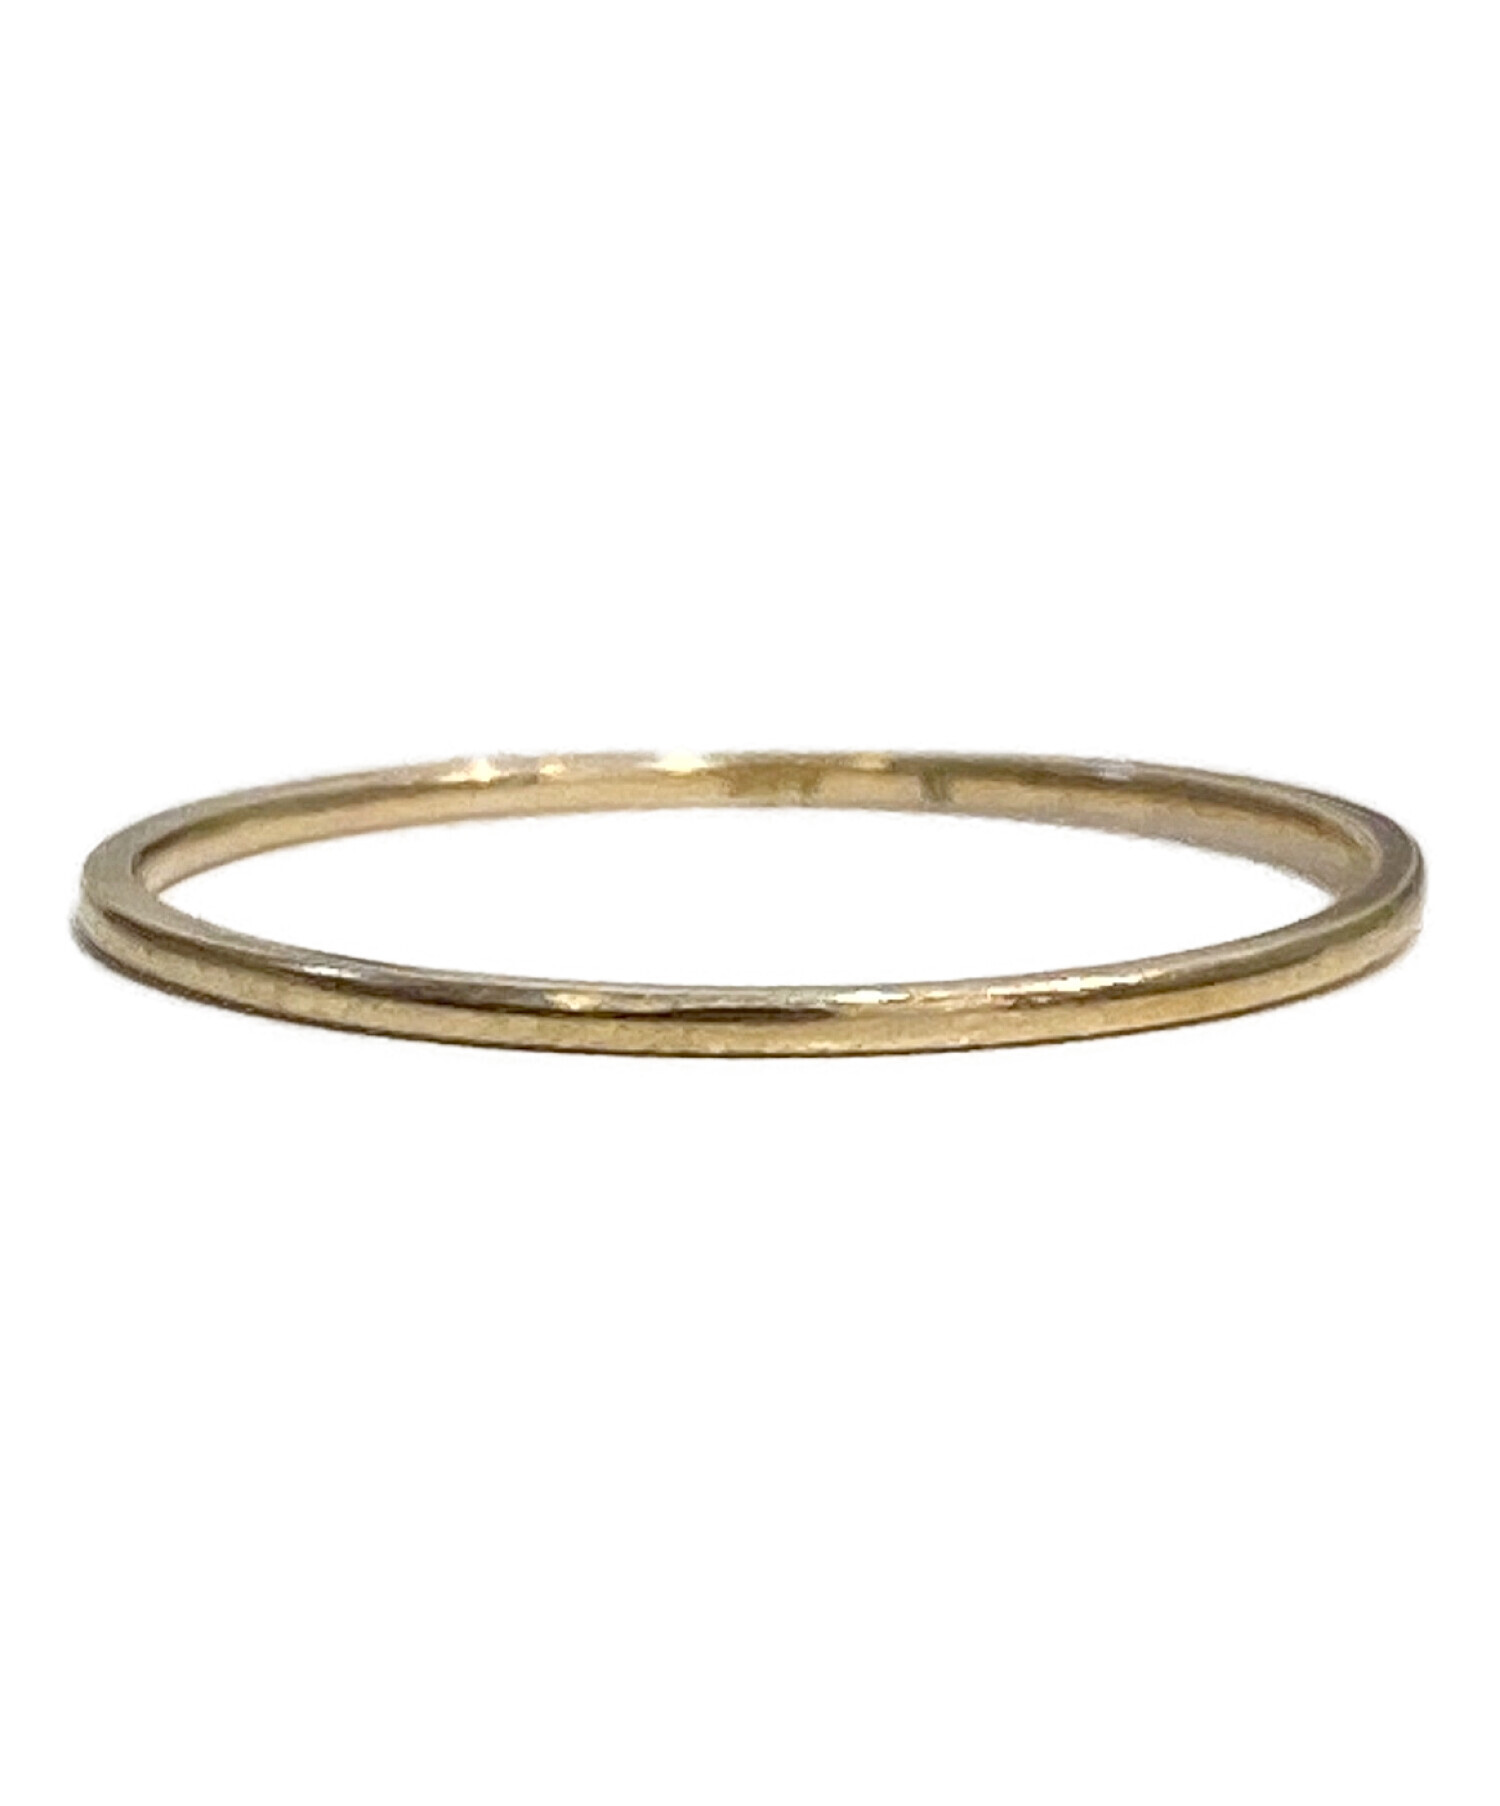 UNUSED (アンユーズド) GOLD K10 ring サイズ:20